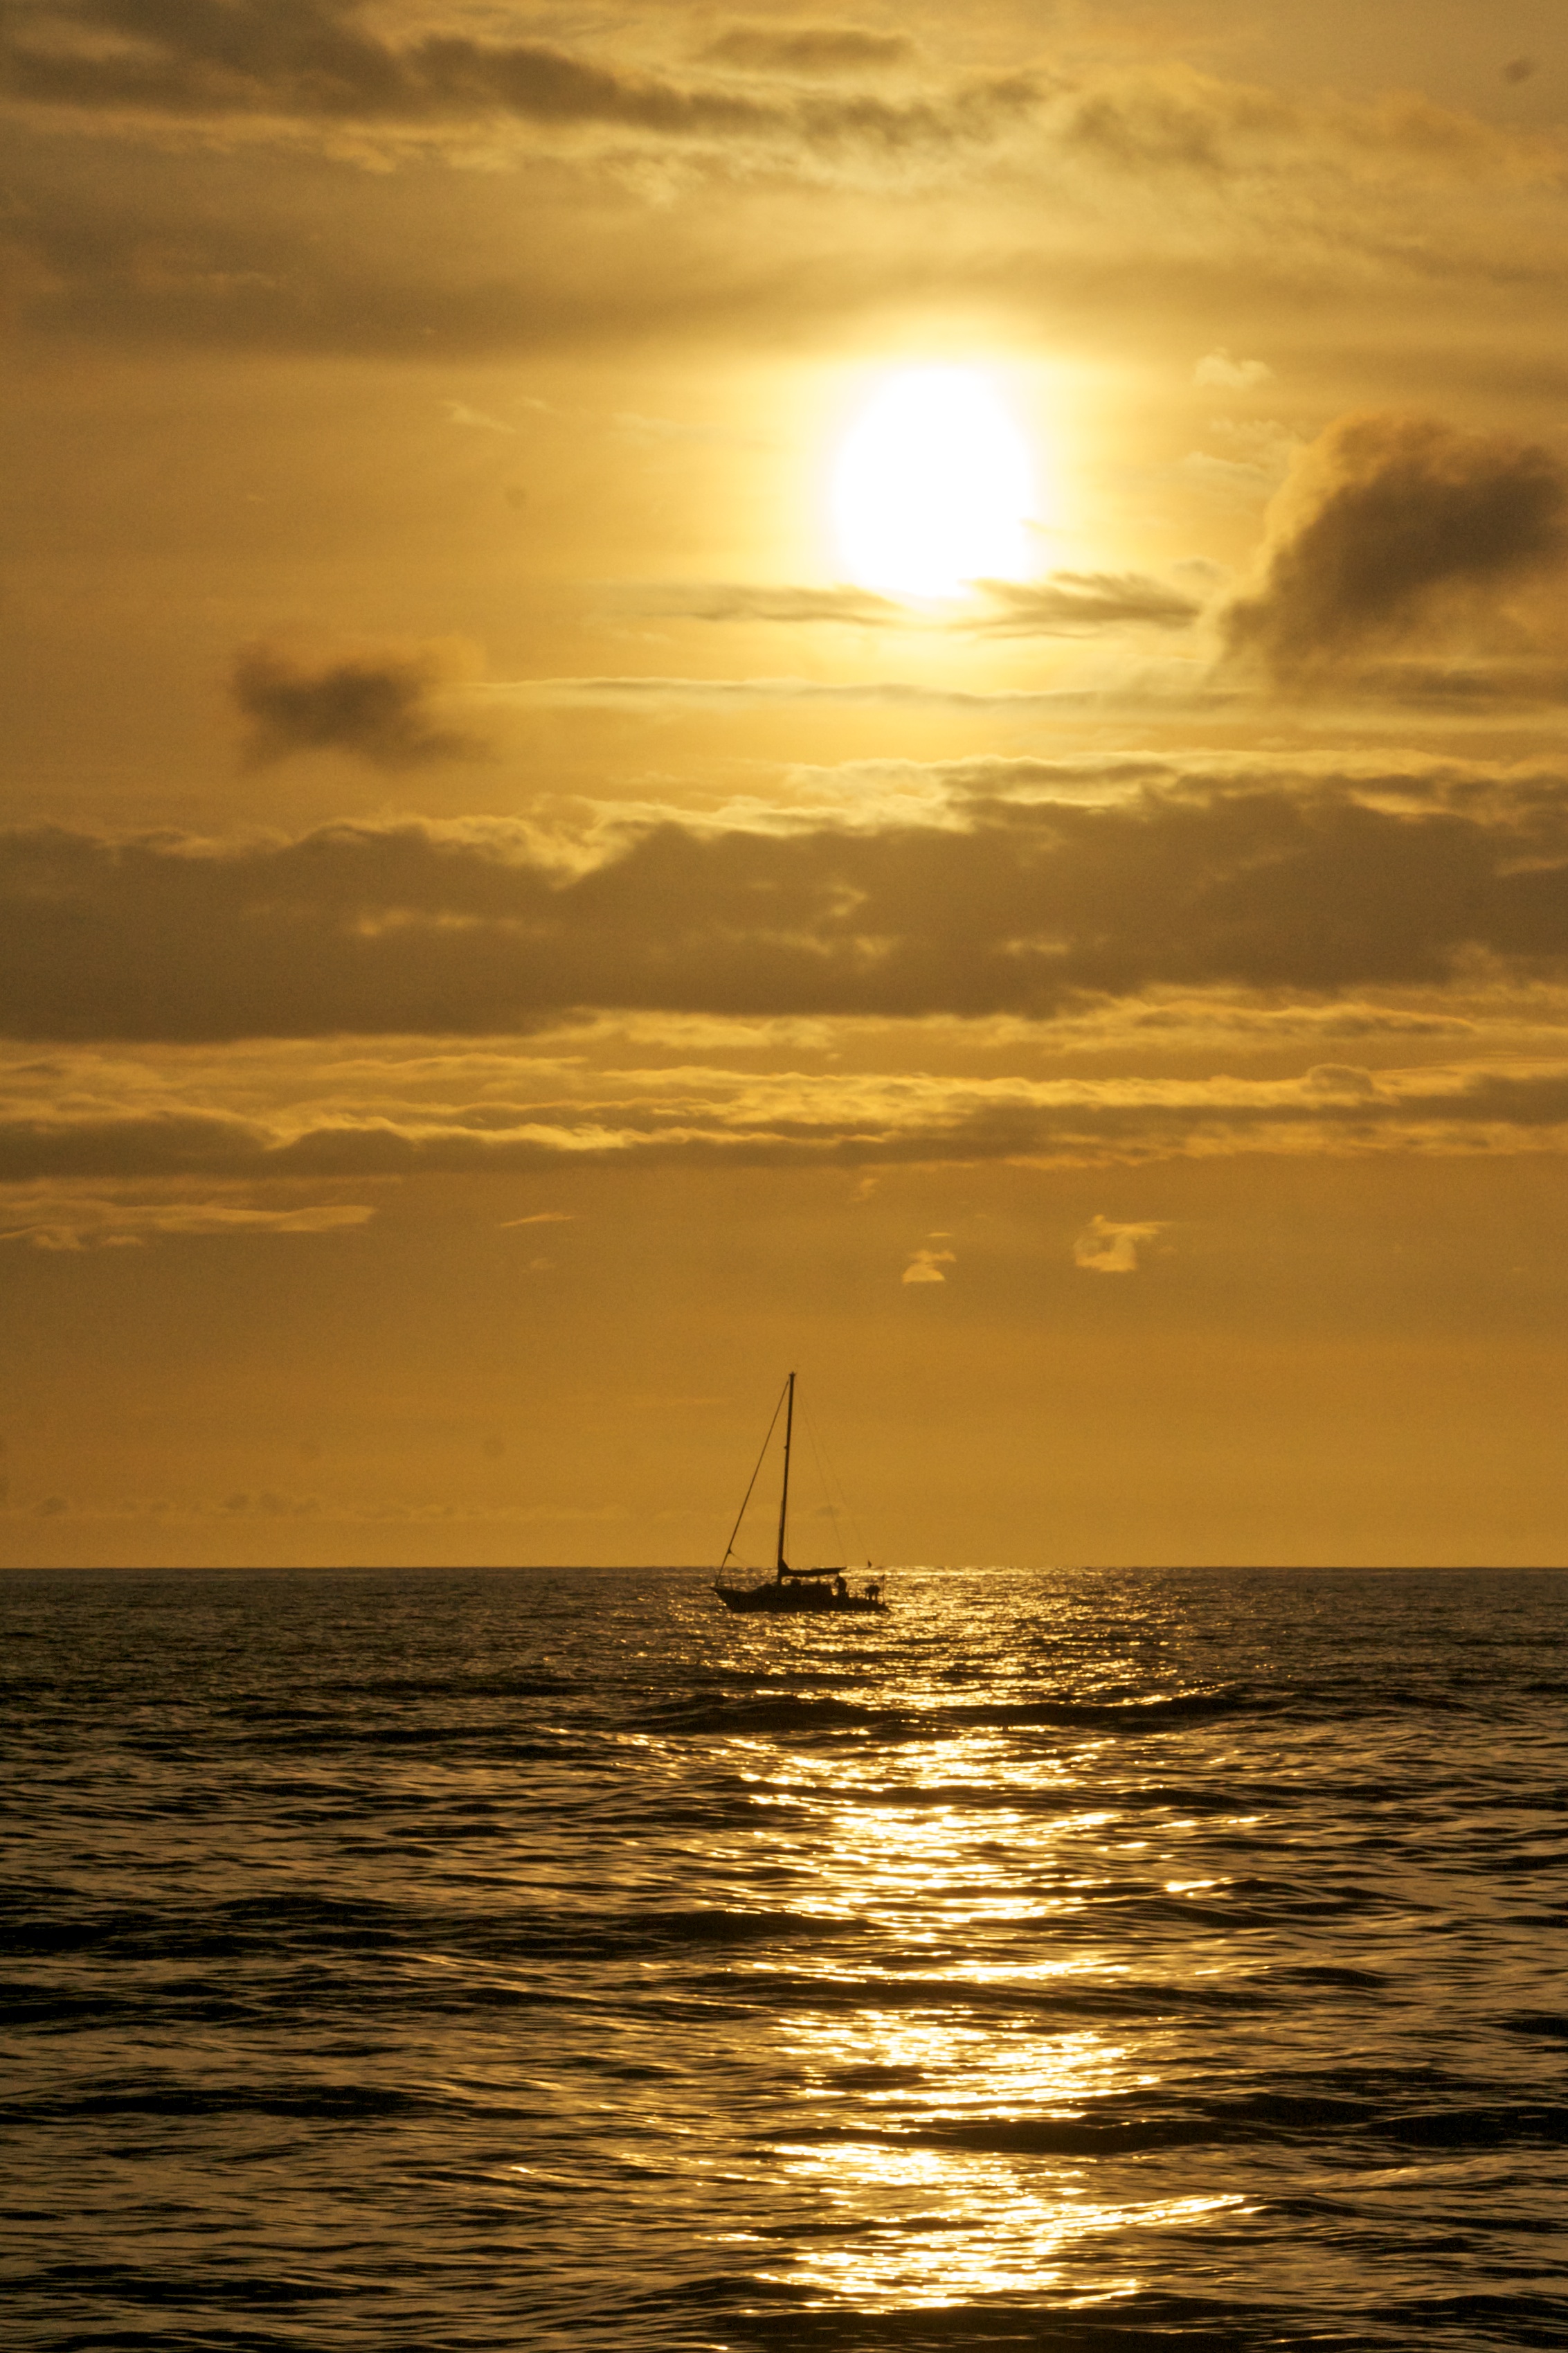 File:Sailboat &amp; Sunset, Madeira - Nov 2010.jpg - Wikimedia Commons